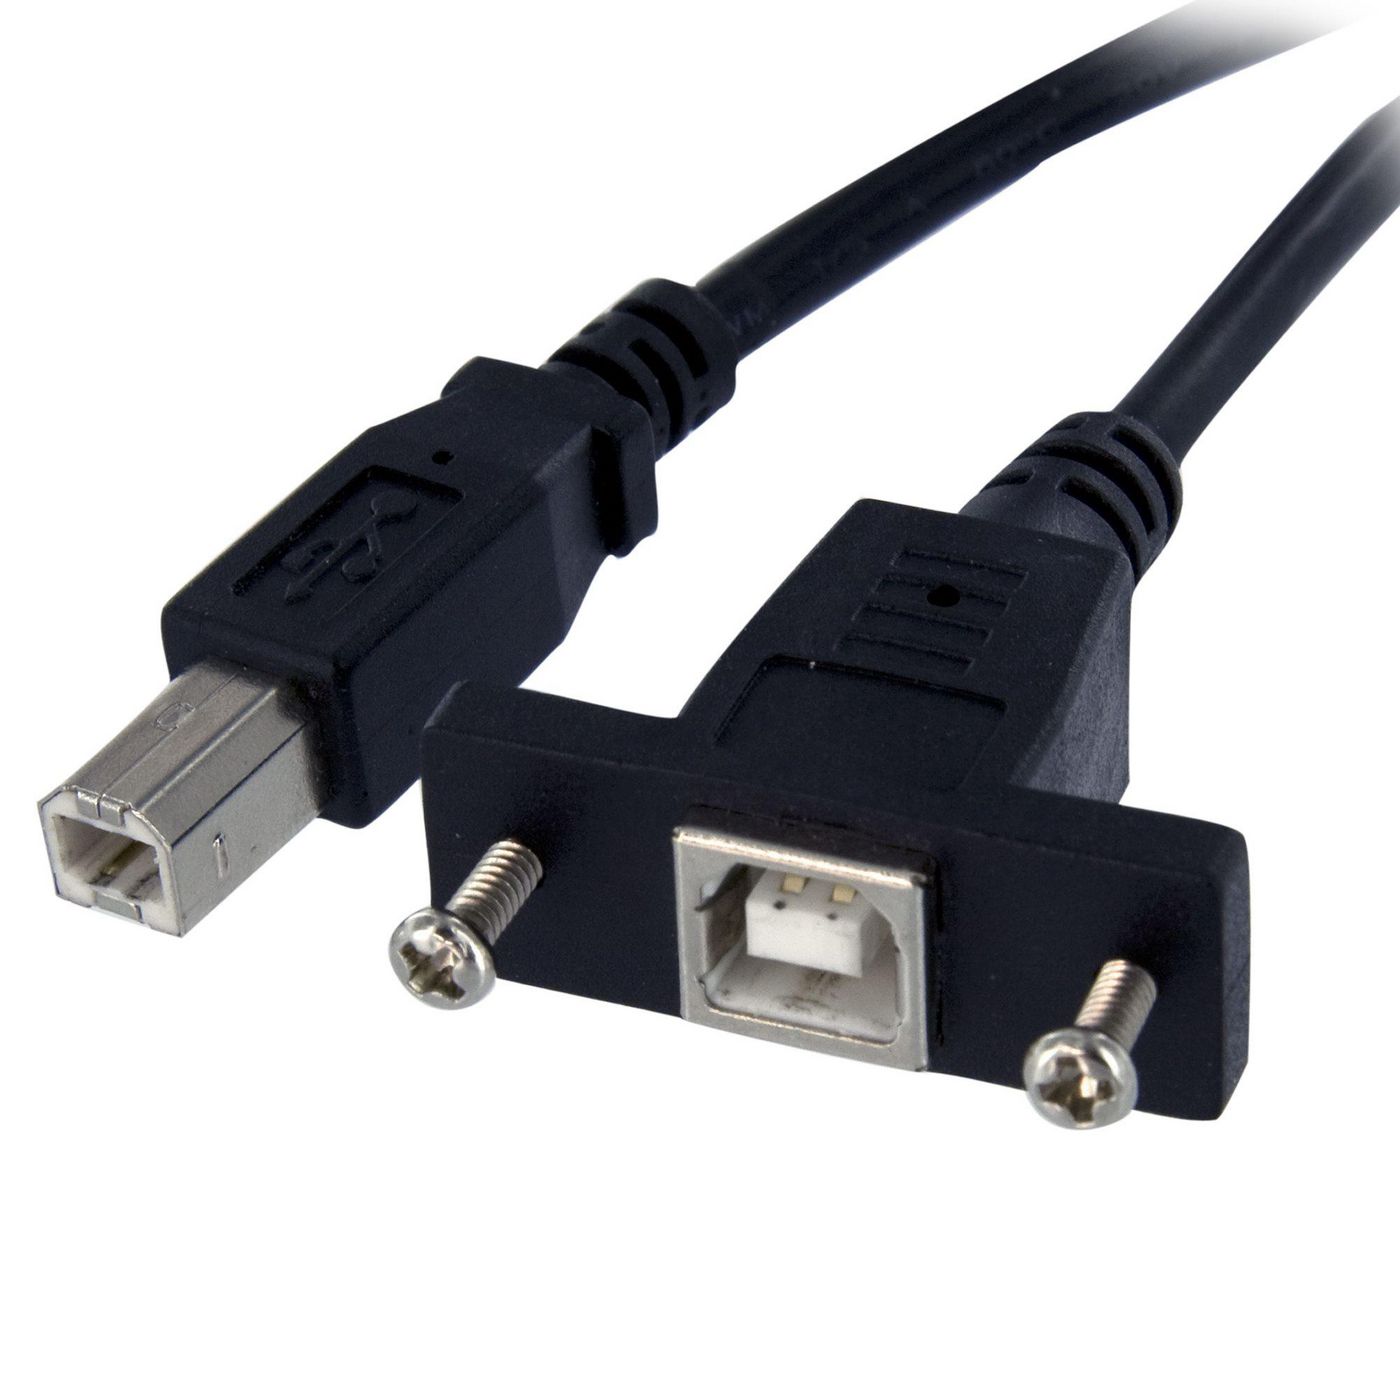 StarTechcom USBPNLBFBM1 1FT USB 2.0 PANEL MOUNT CABLE 